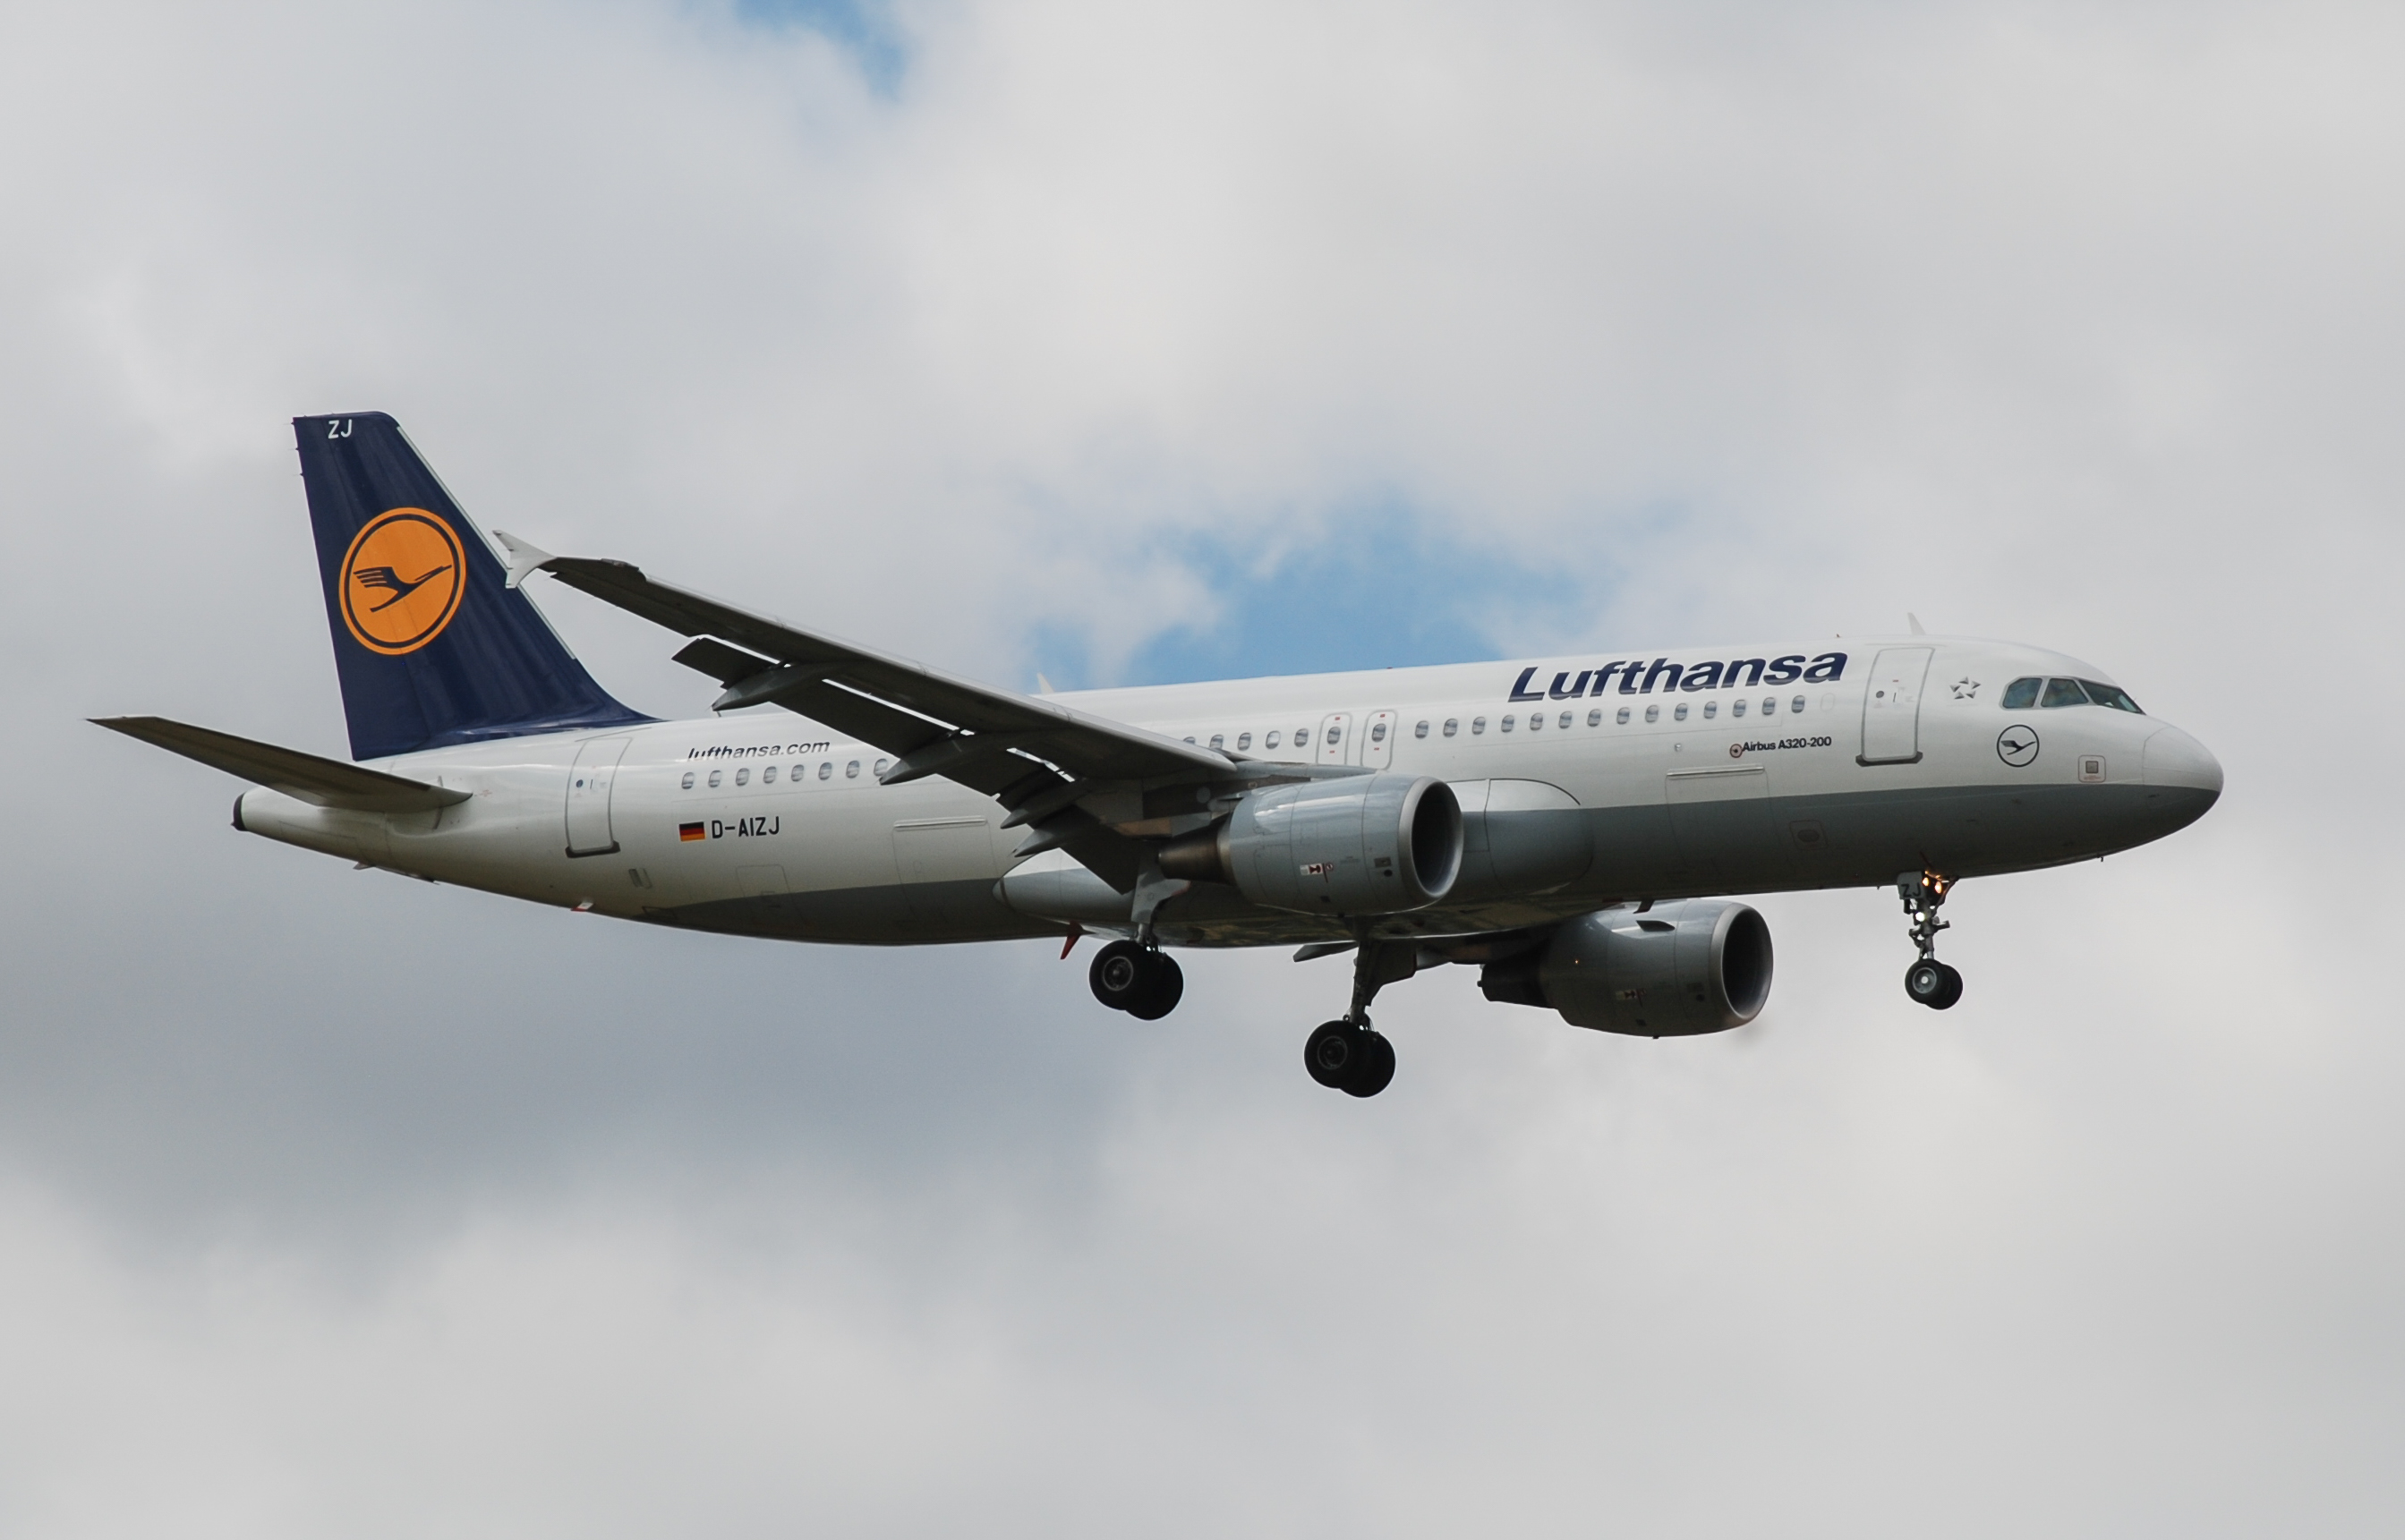 D-AIZJ/DAIZJ Lufthansa Airbus A320 Airframe Information - AVSpotters.com